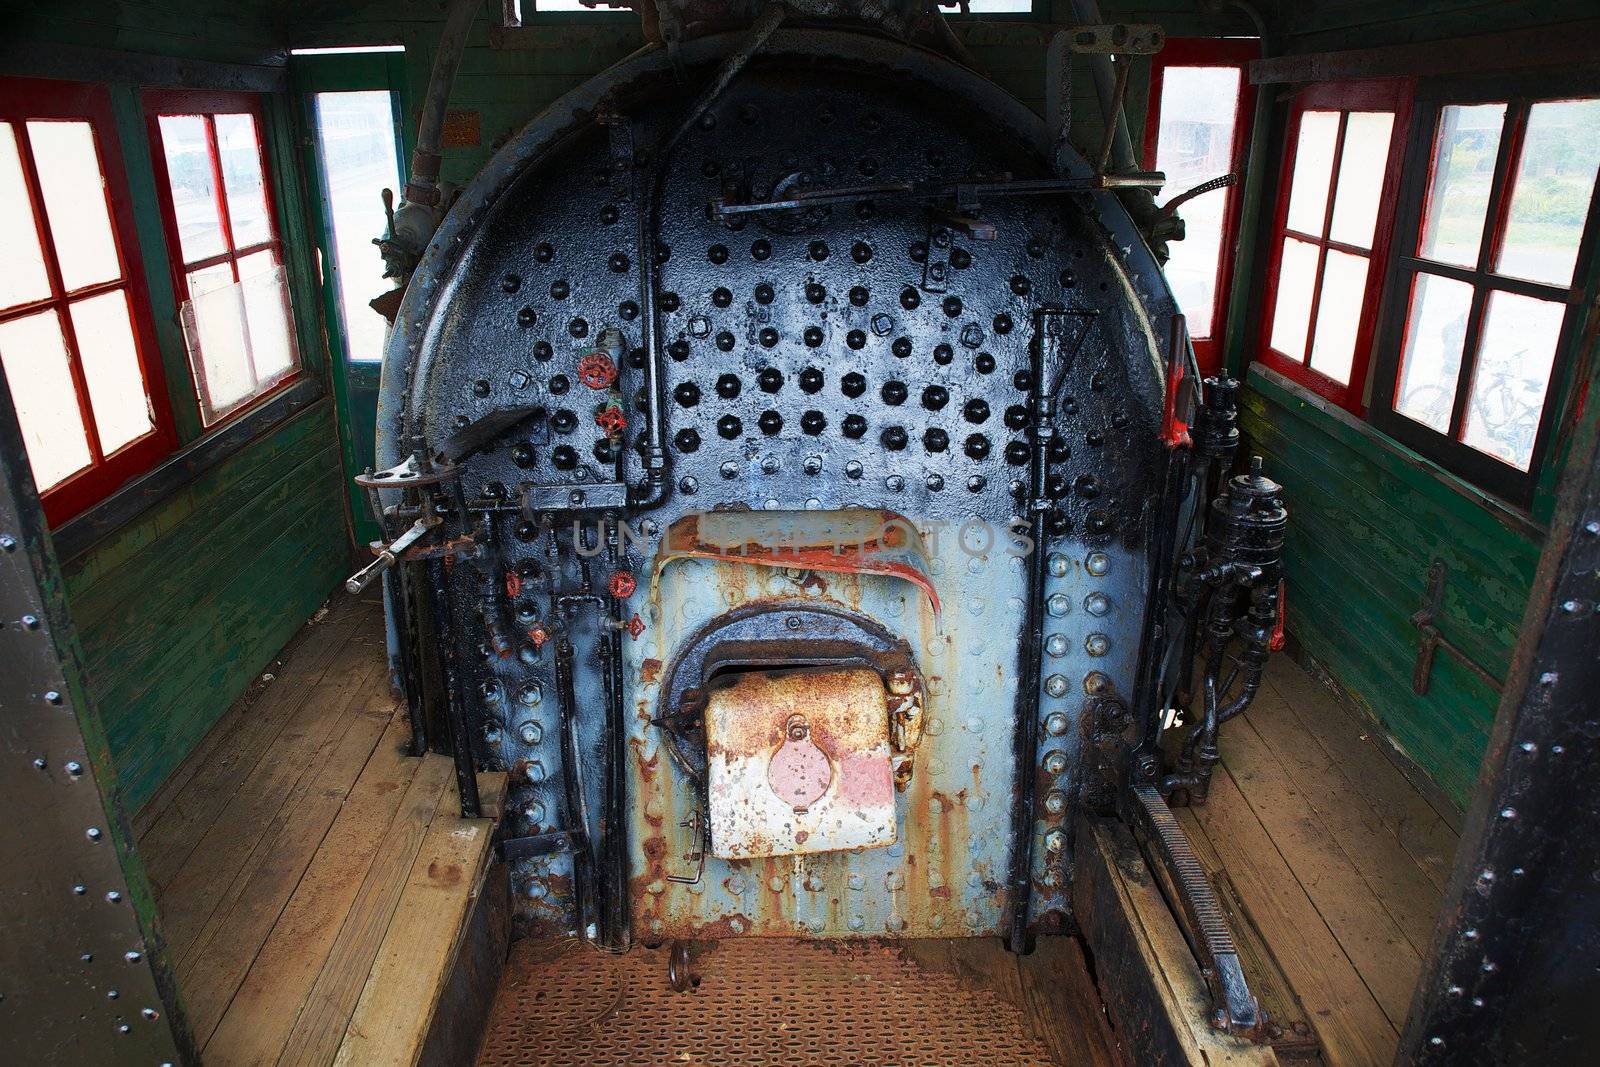 Locomotive Steam Engine Boiler by bobkeenan